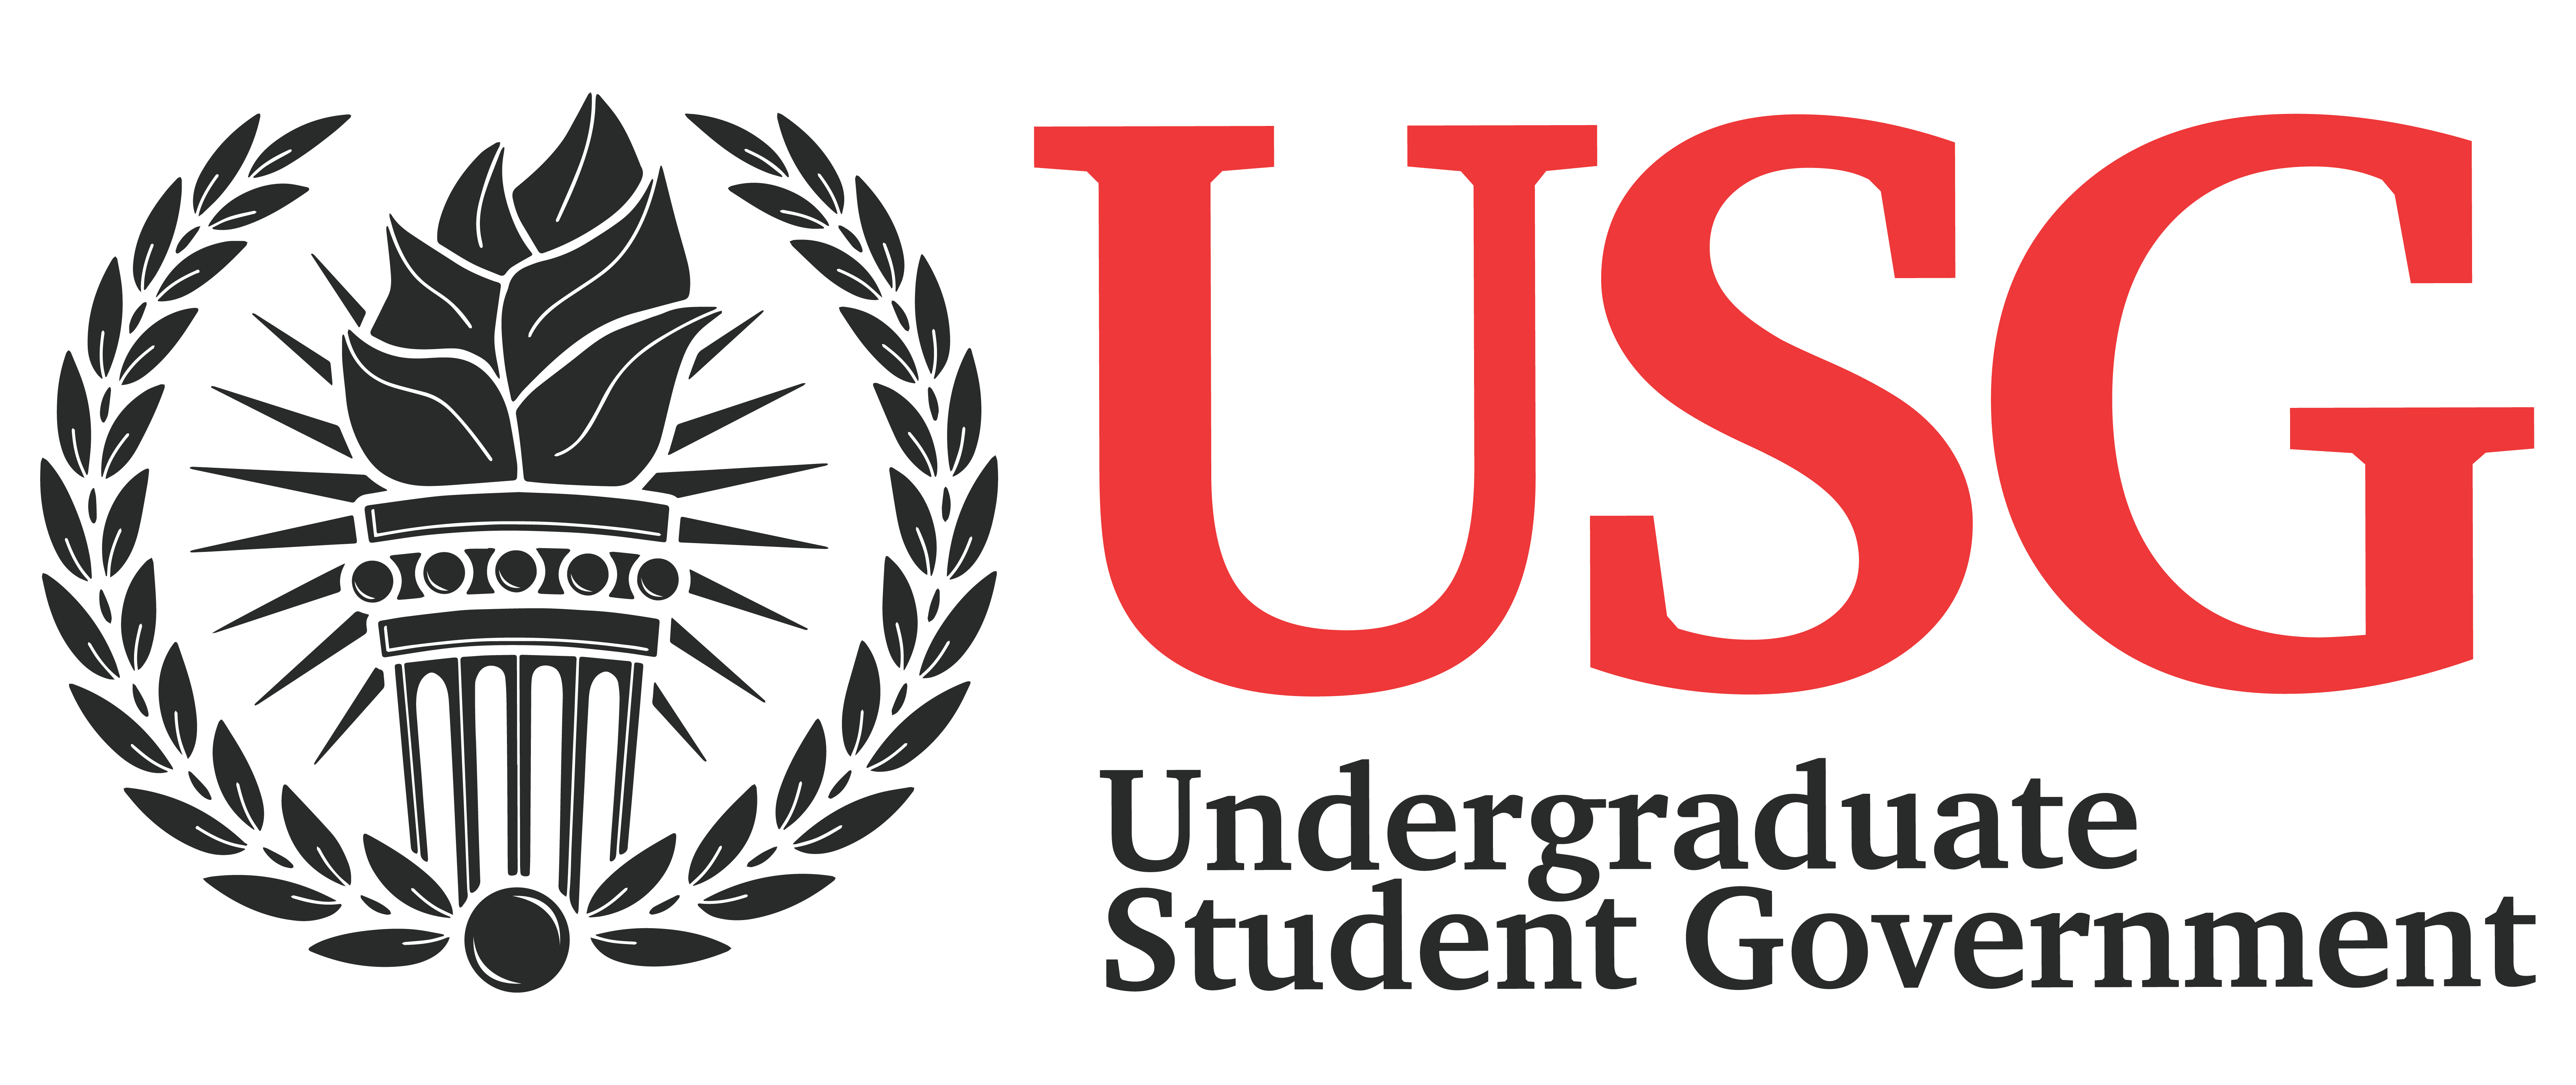 USC Undergraduate Student Government